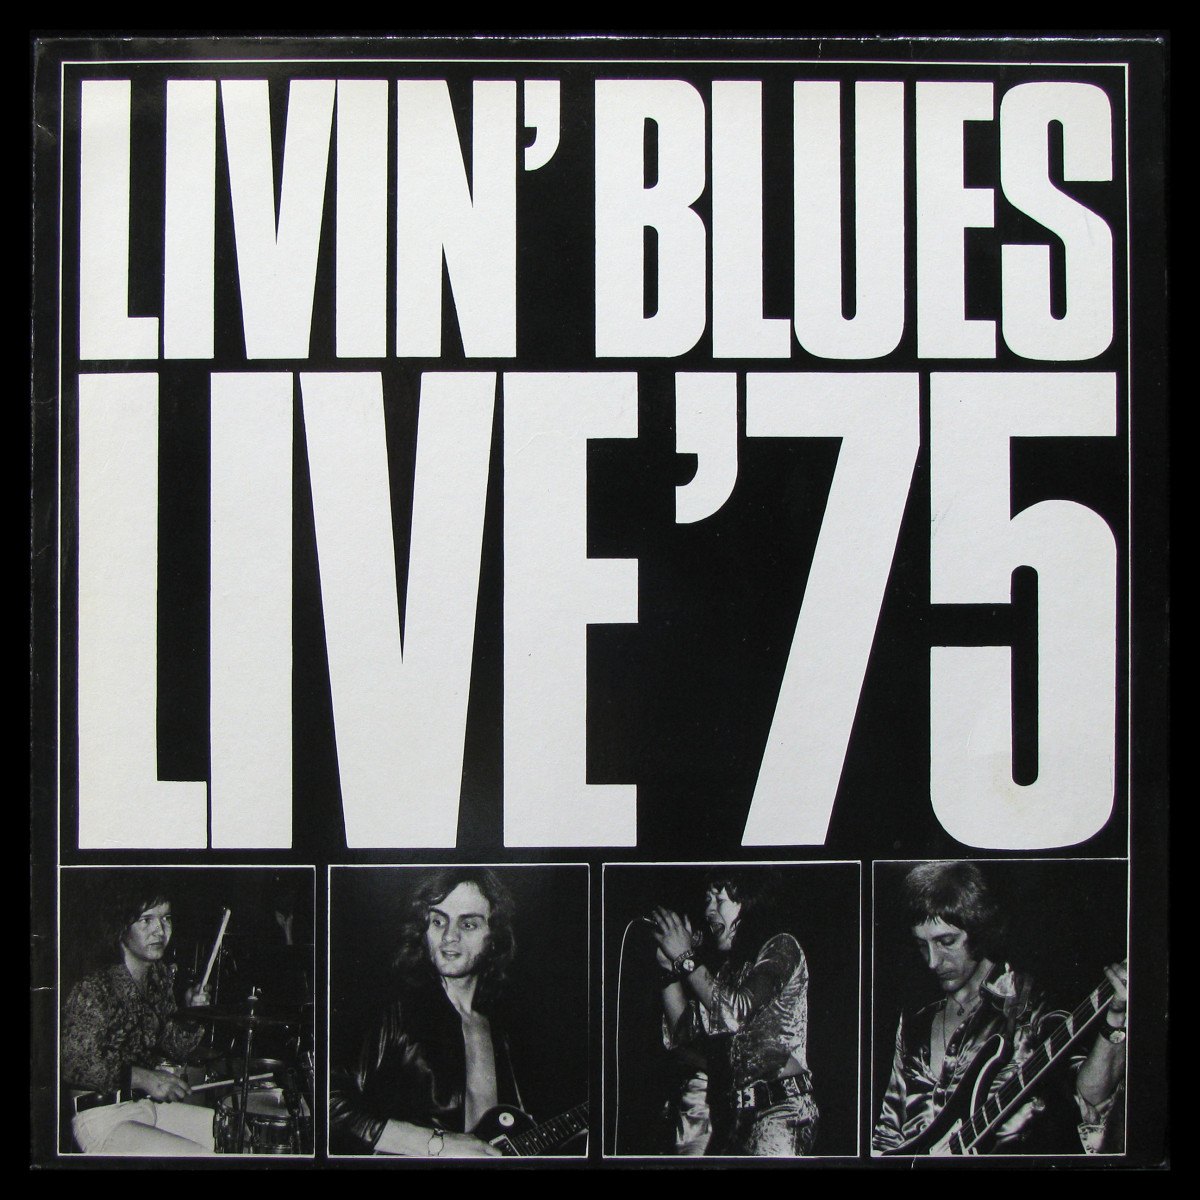 Live '75